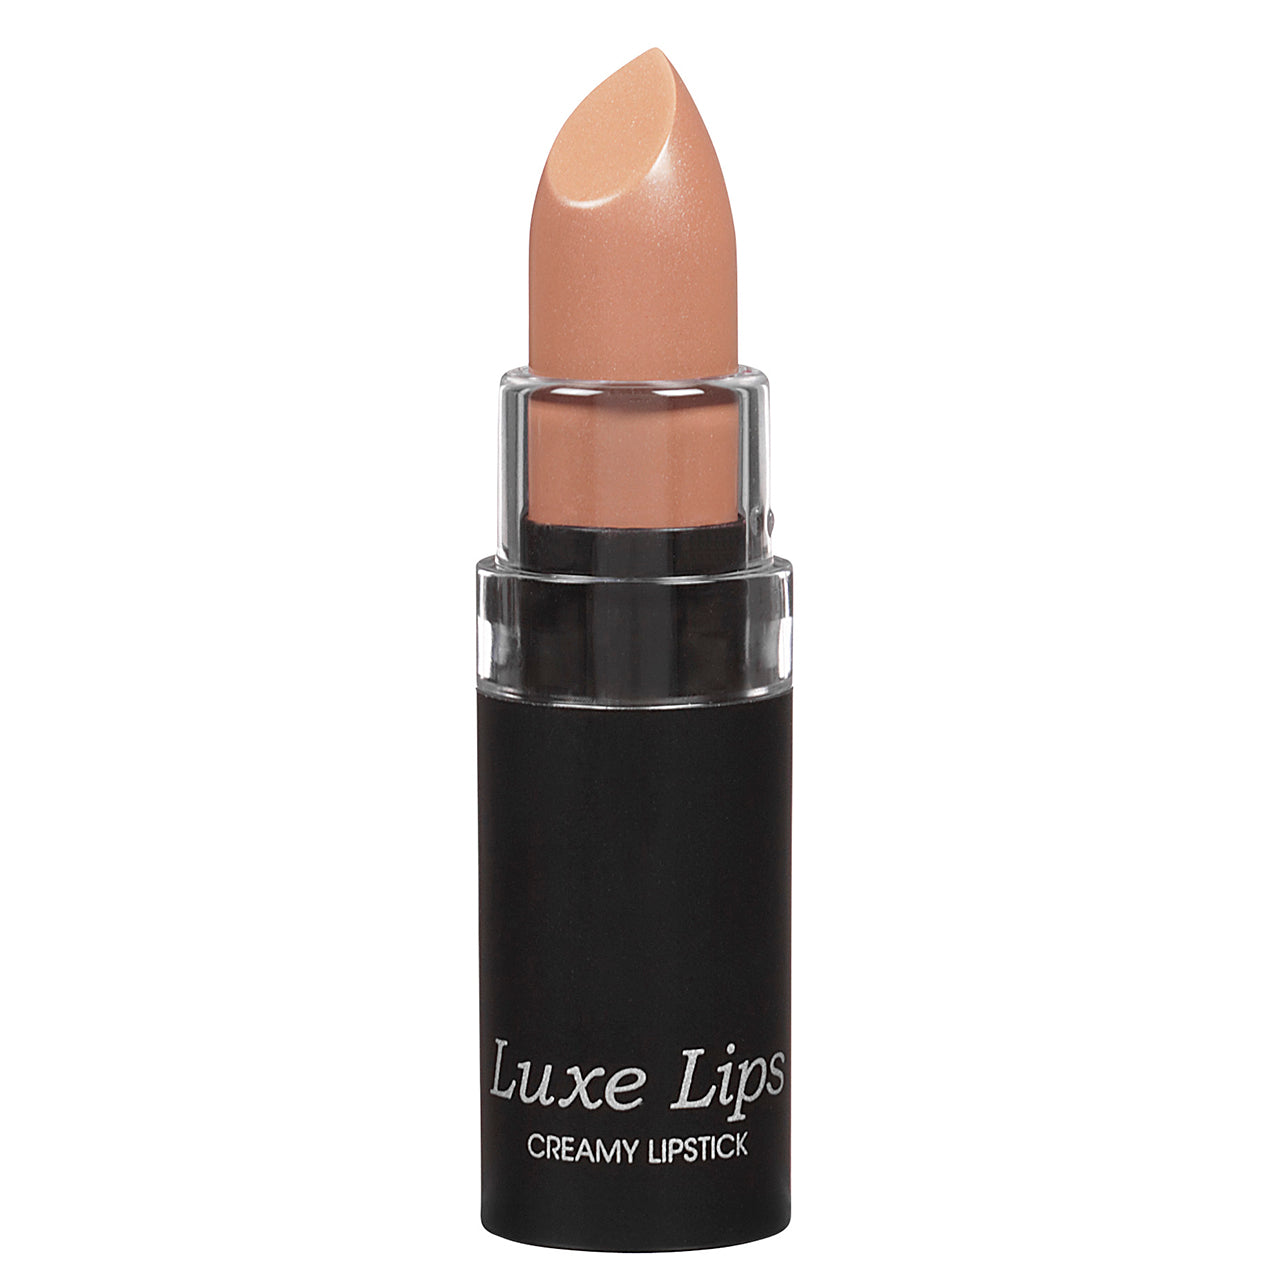 Styli-Style Luxe Lips Creamy Lipstick - Birthday Suit - ADDROS.COM